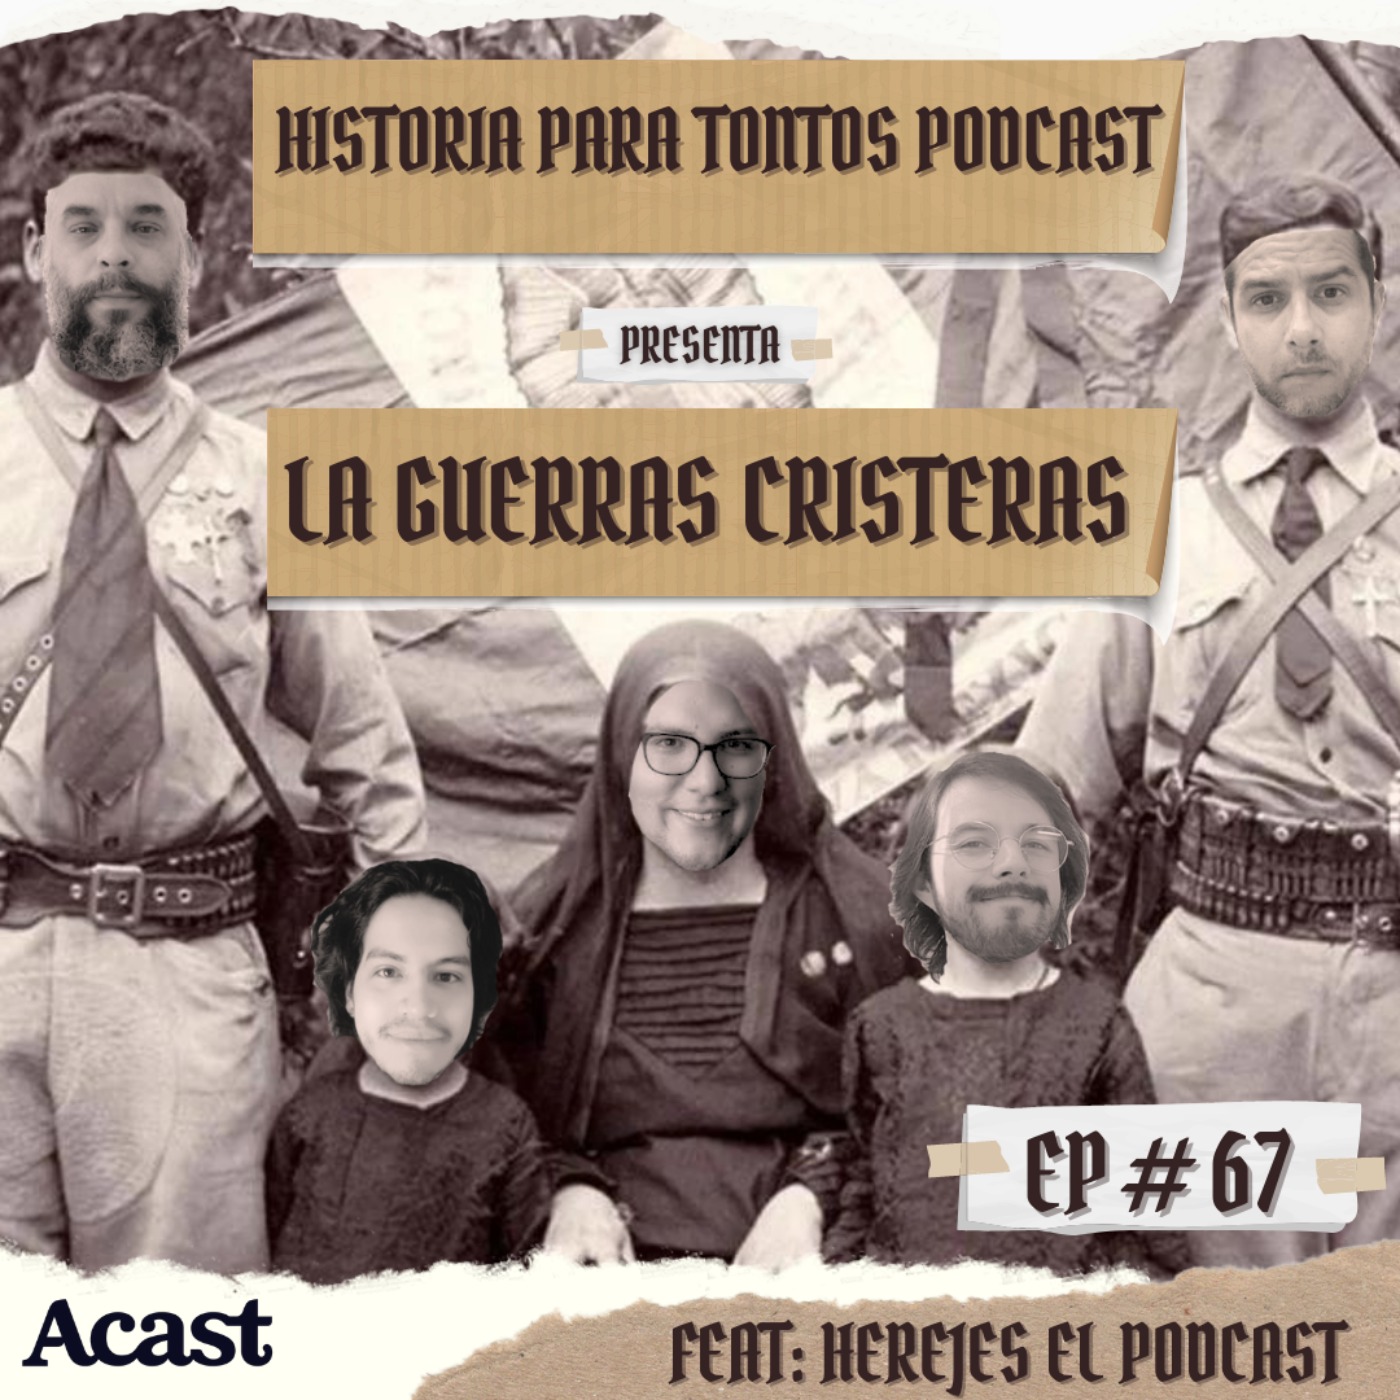 cover art for Episodio 67- Guerra Cristera P.2 FEAT. Herejes el Podcast - Historia para tontos Podcast